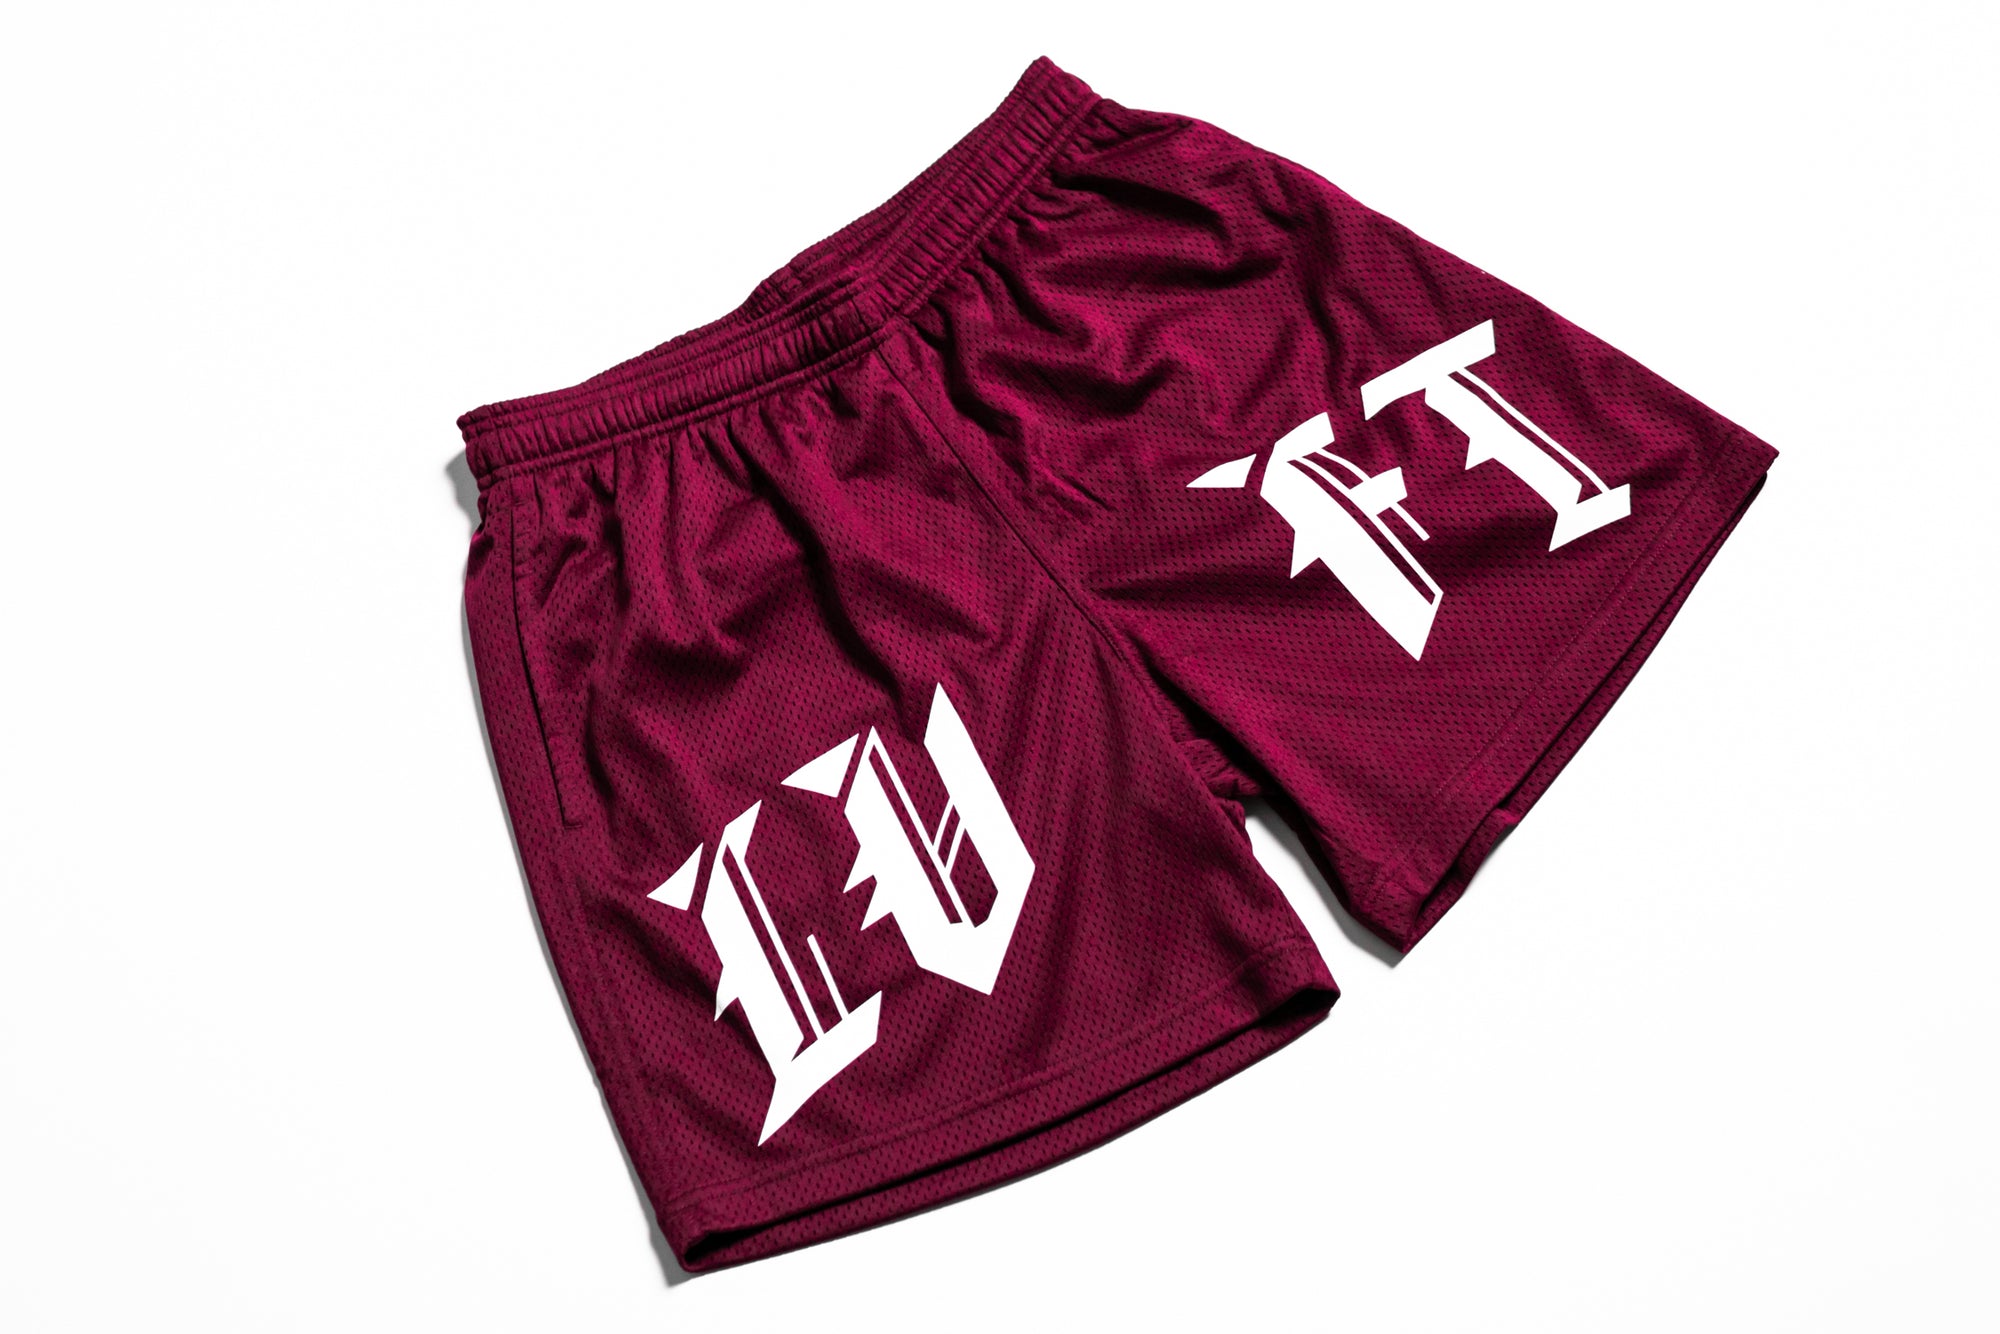 Louis Vuitton, Shorts, Louis Vuitton Basketball Shorts